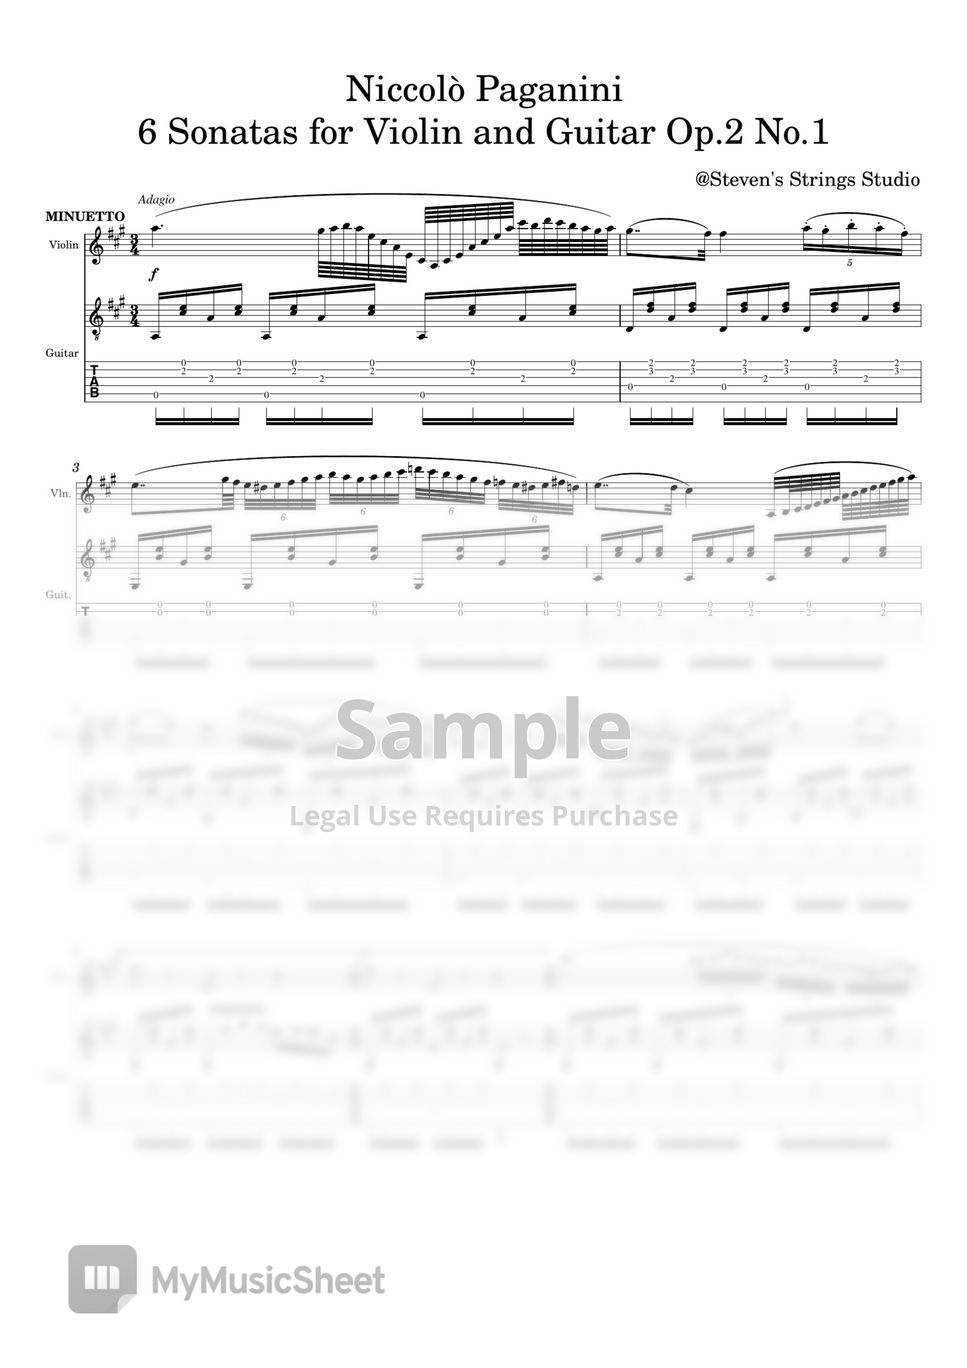 Niccolò Paganini - Paganini 6 Sonatas for Violin and Guitar Op.2 No.1 (Violin Guitar Duet) by Steven's Strings Studio